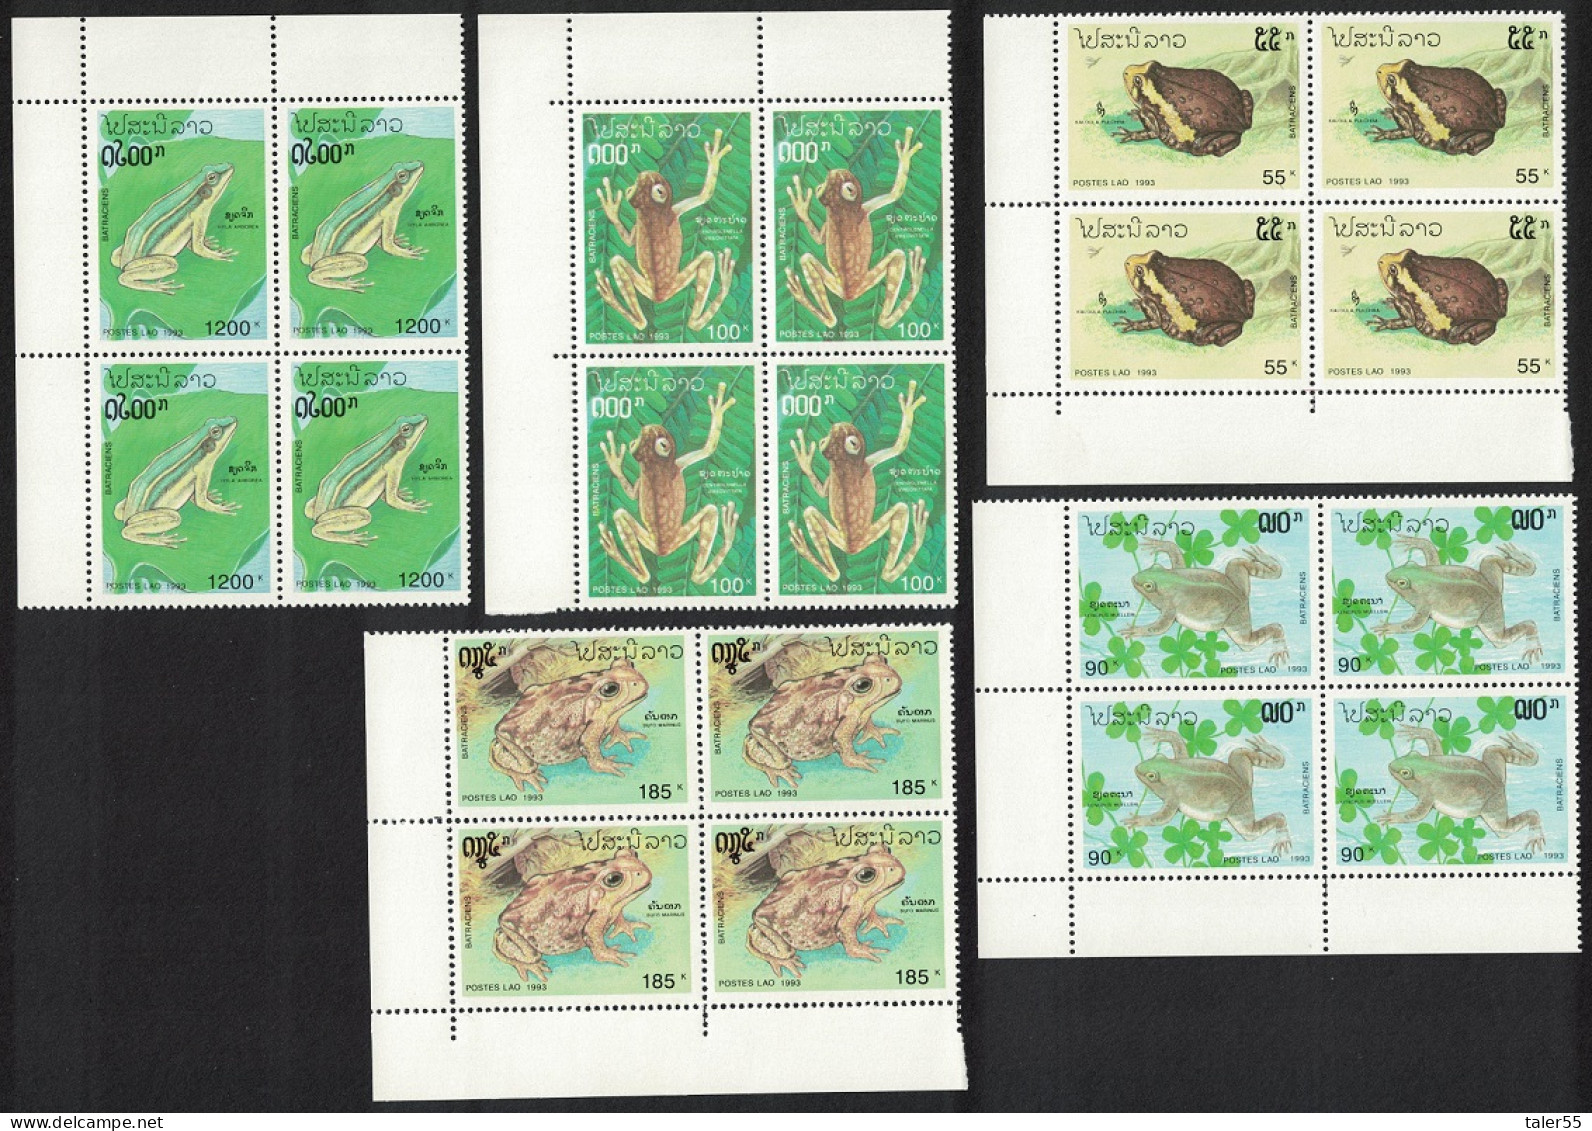 Laos Frog Toad Bullfrog Amphibians 5v Corner Blocks Of 4 1993 MNH SG#1334-1338 - Laos